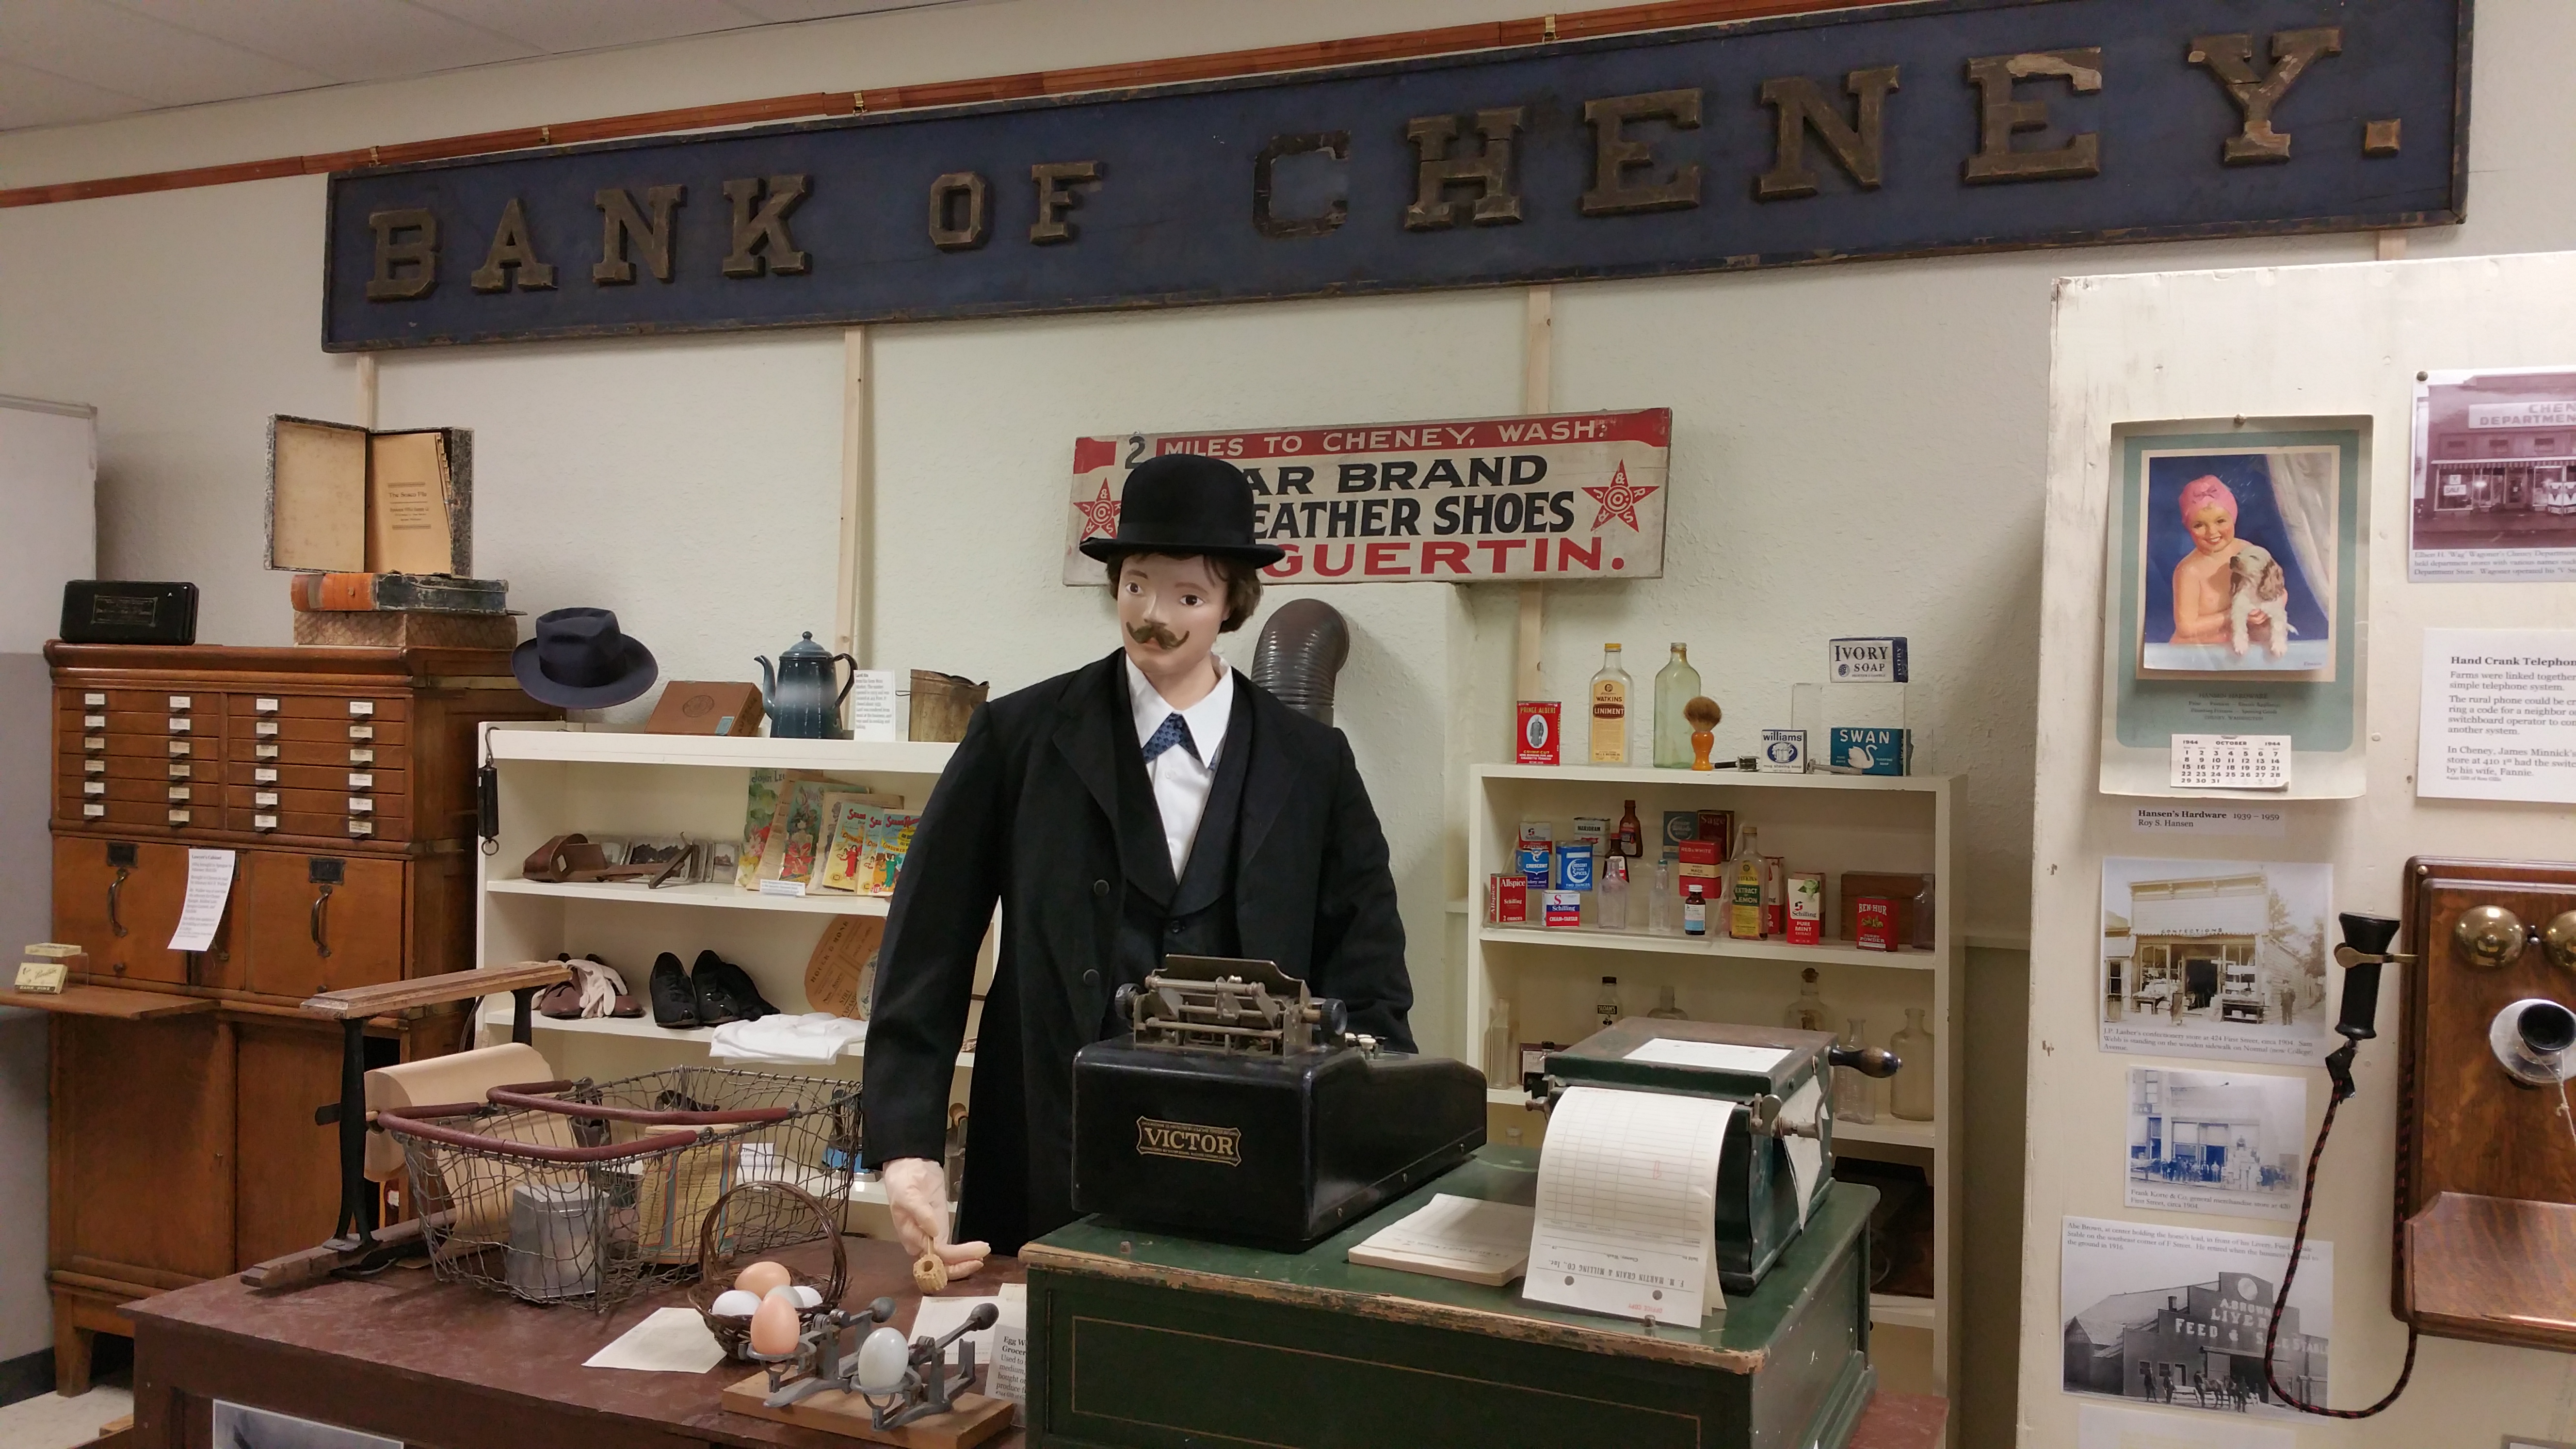 Mr Franklin's General Store